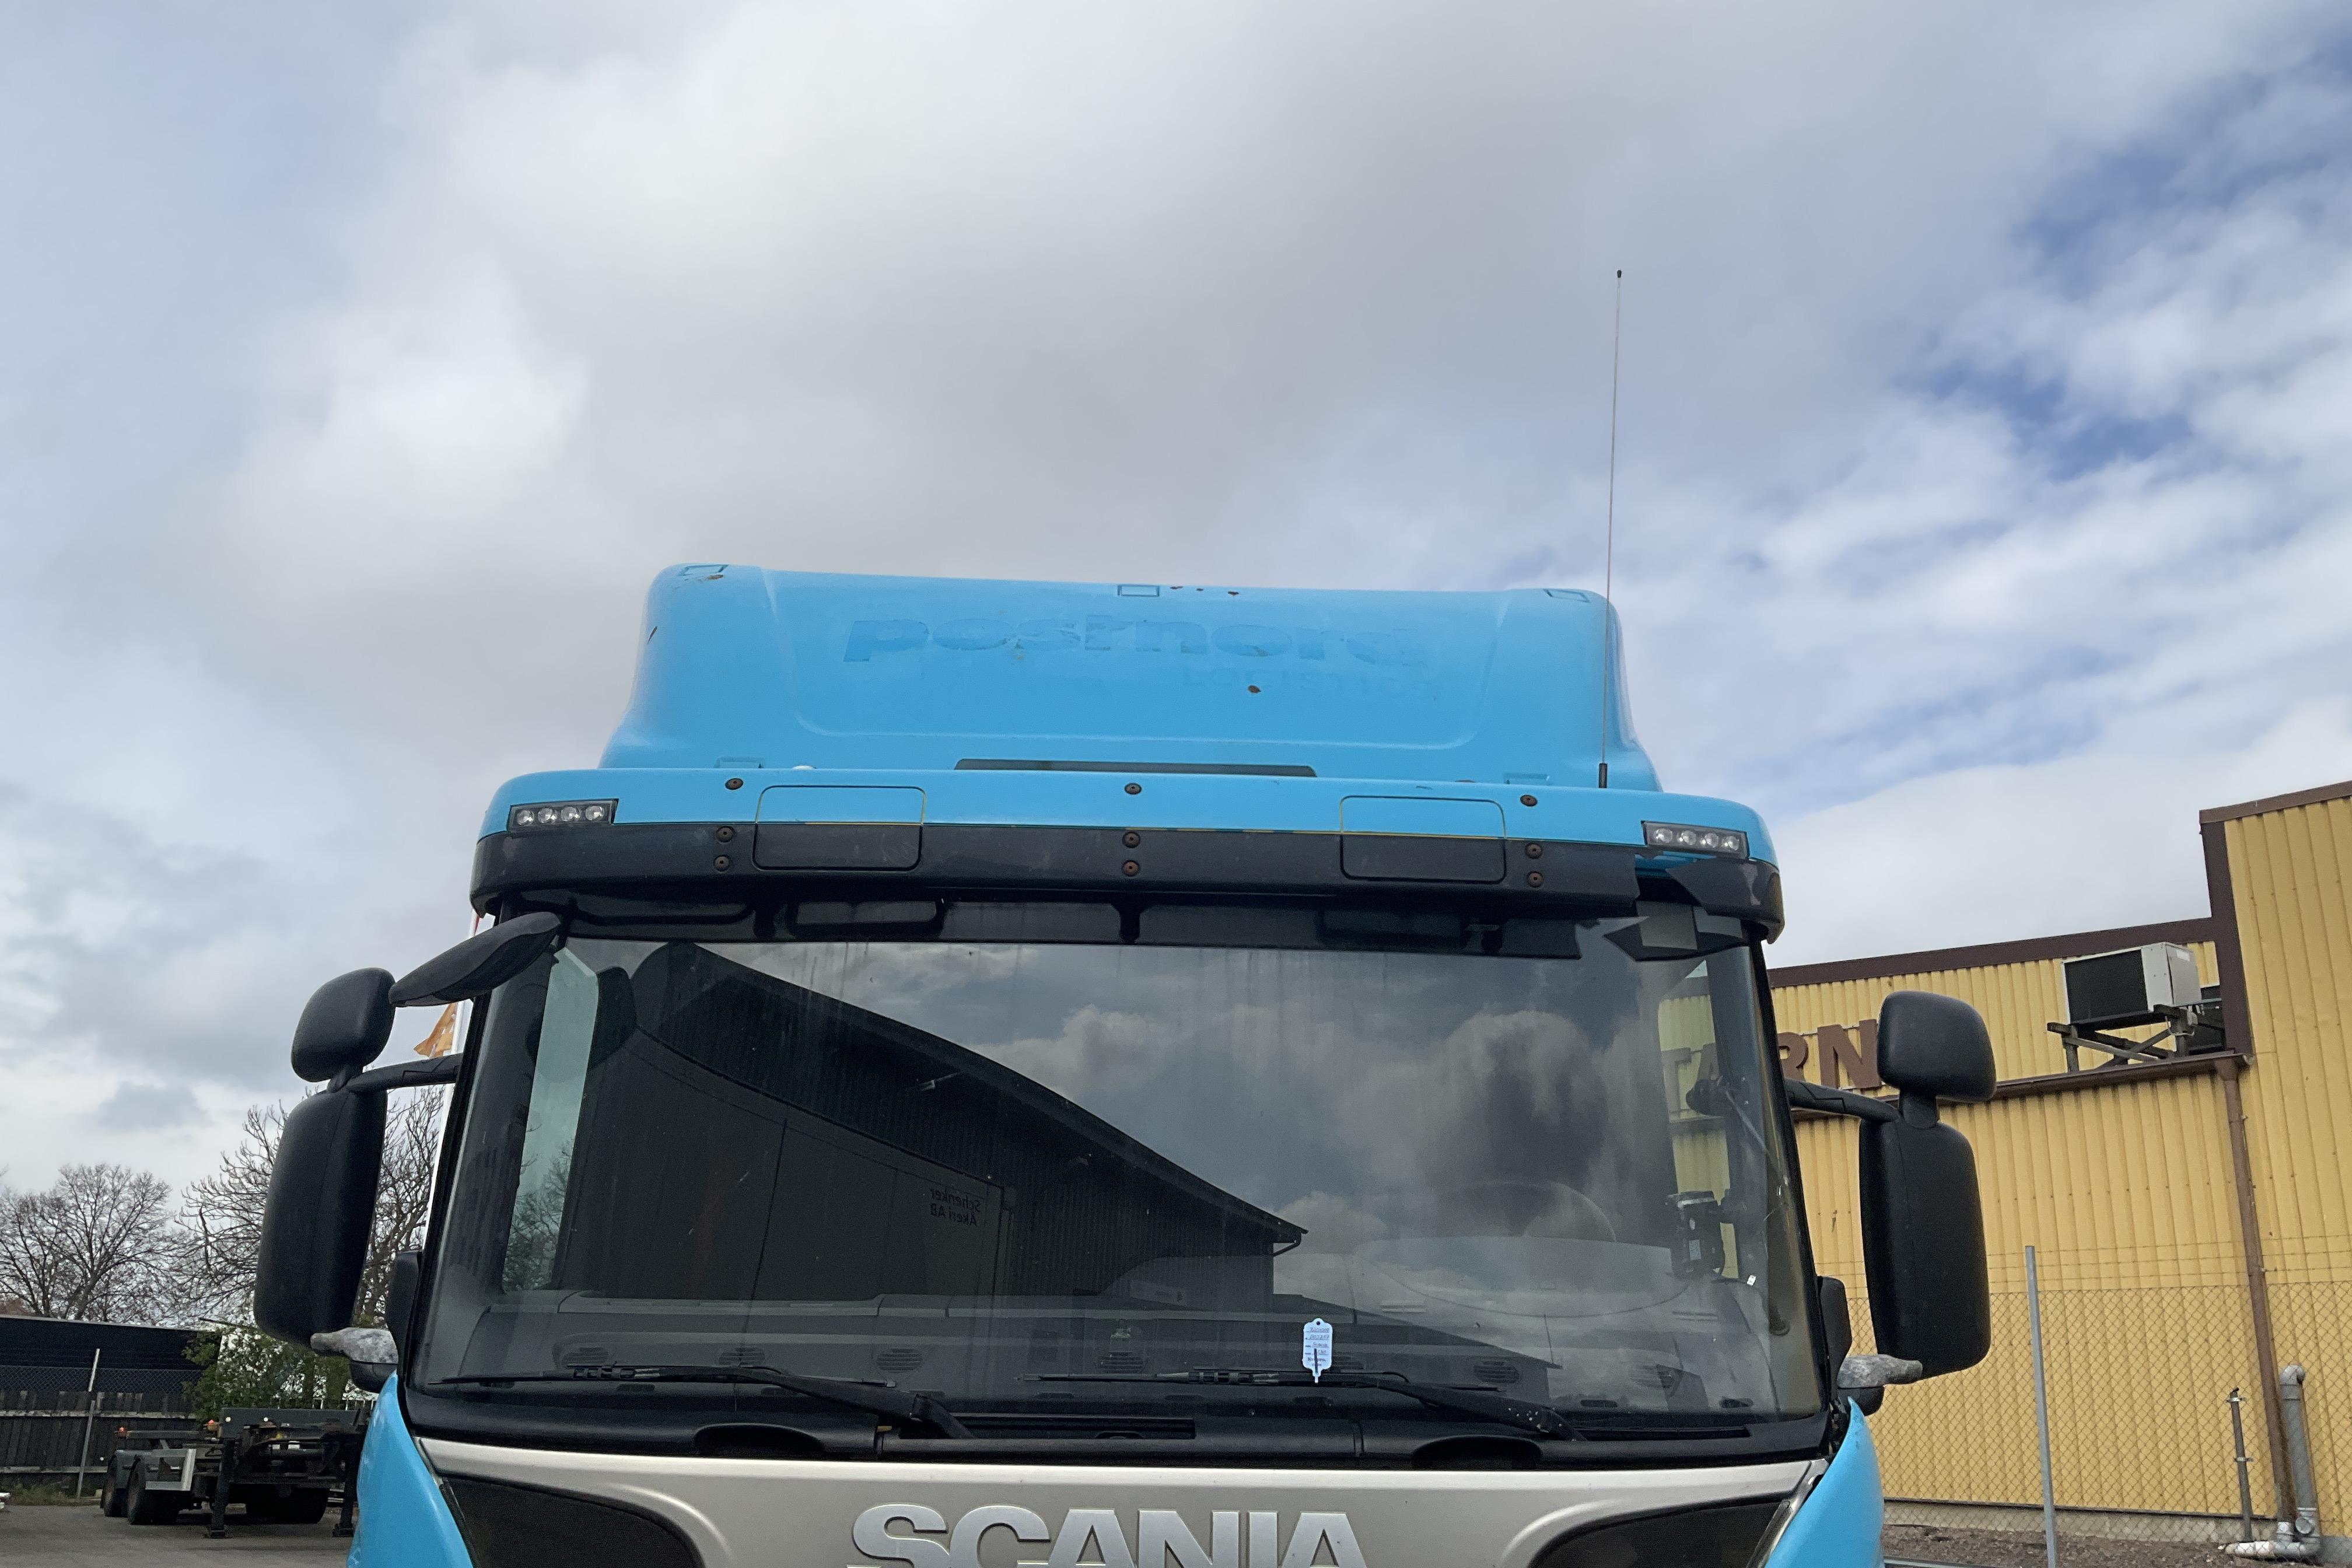 Scania P230 - 734 271 km - Automatic - blue - 2013